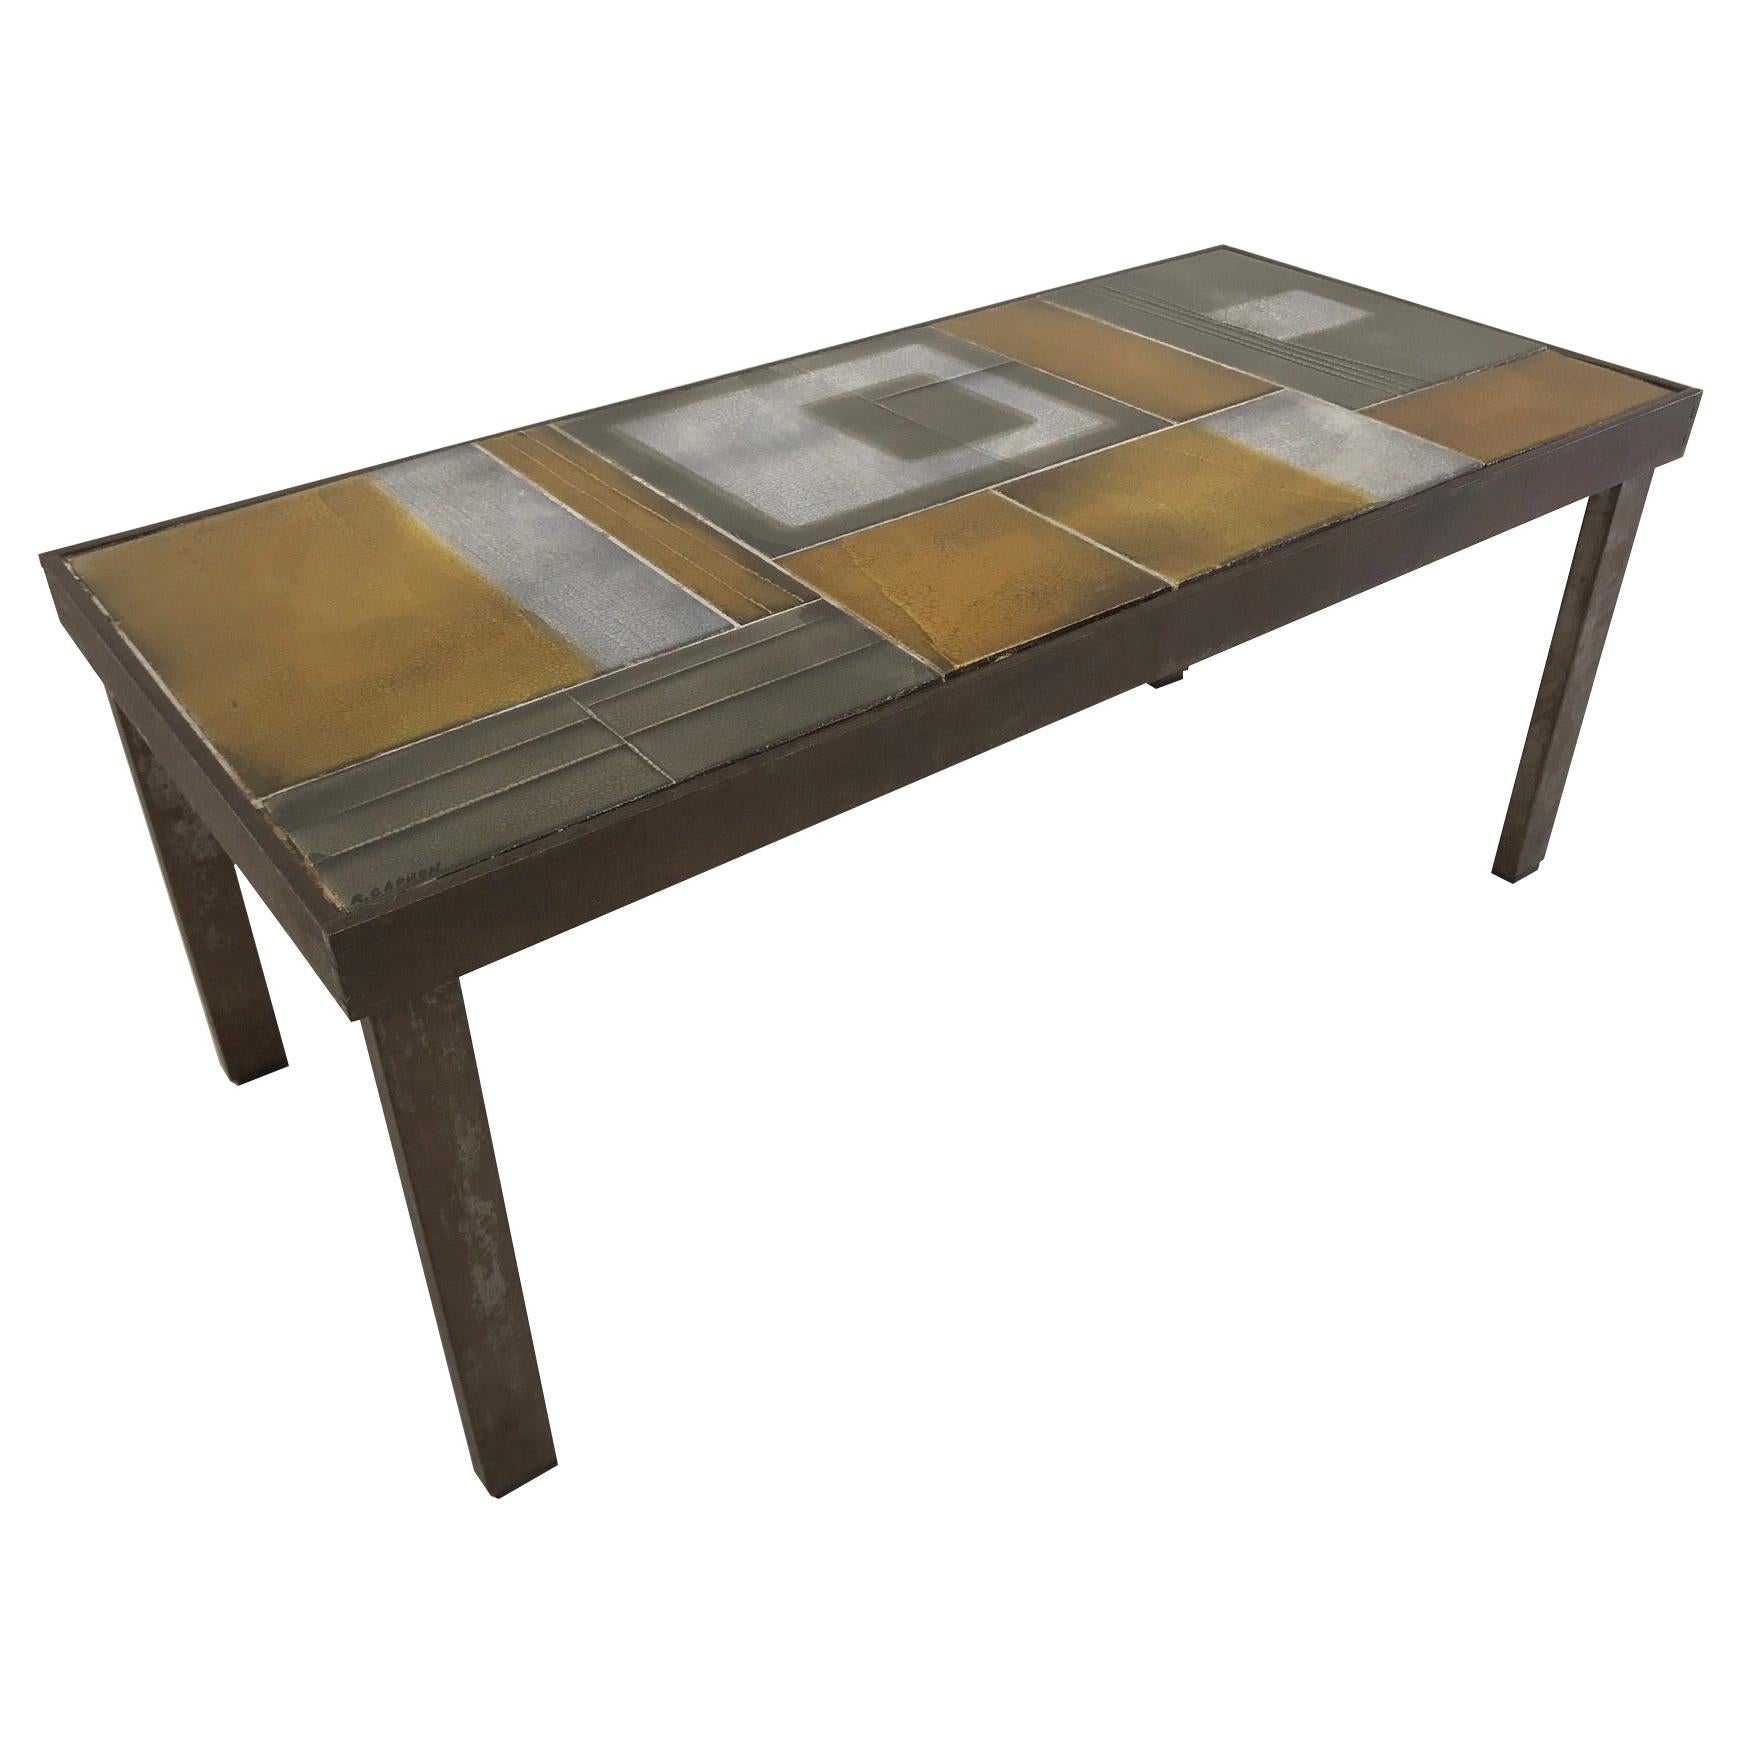 Roger Capron, Glazed Lava Tile Coffee Table, 1962